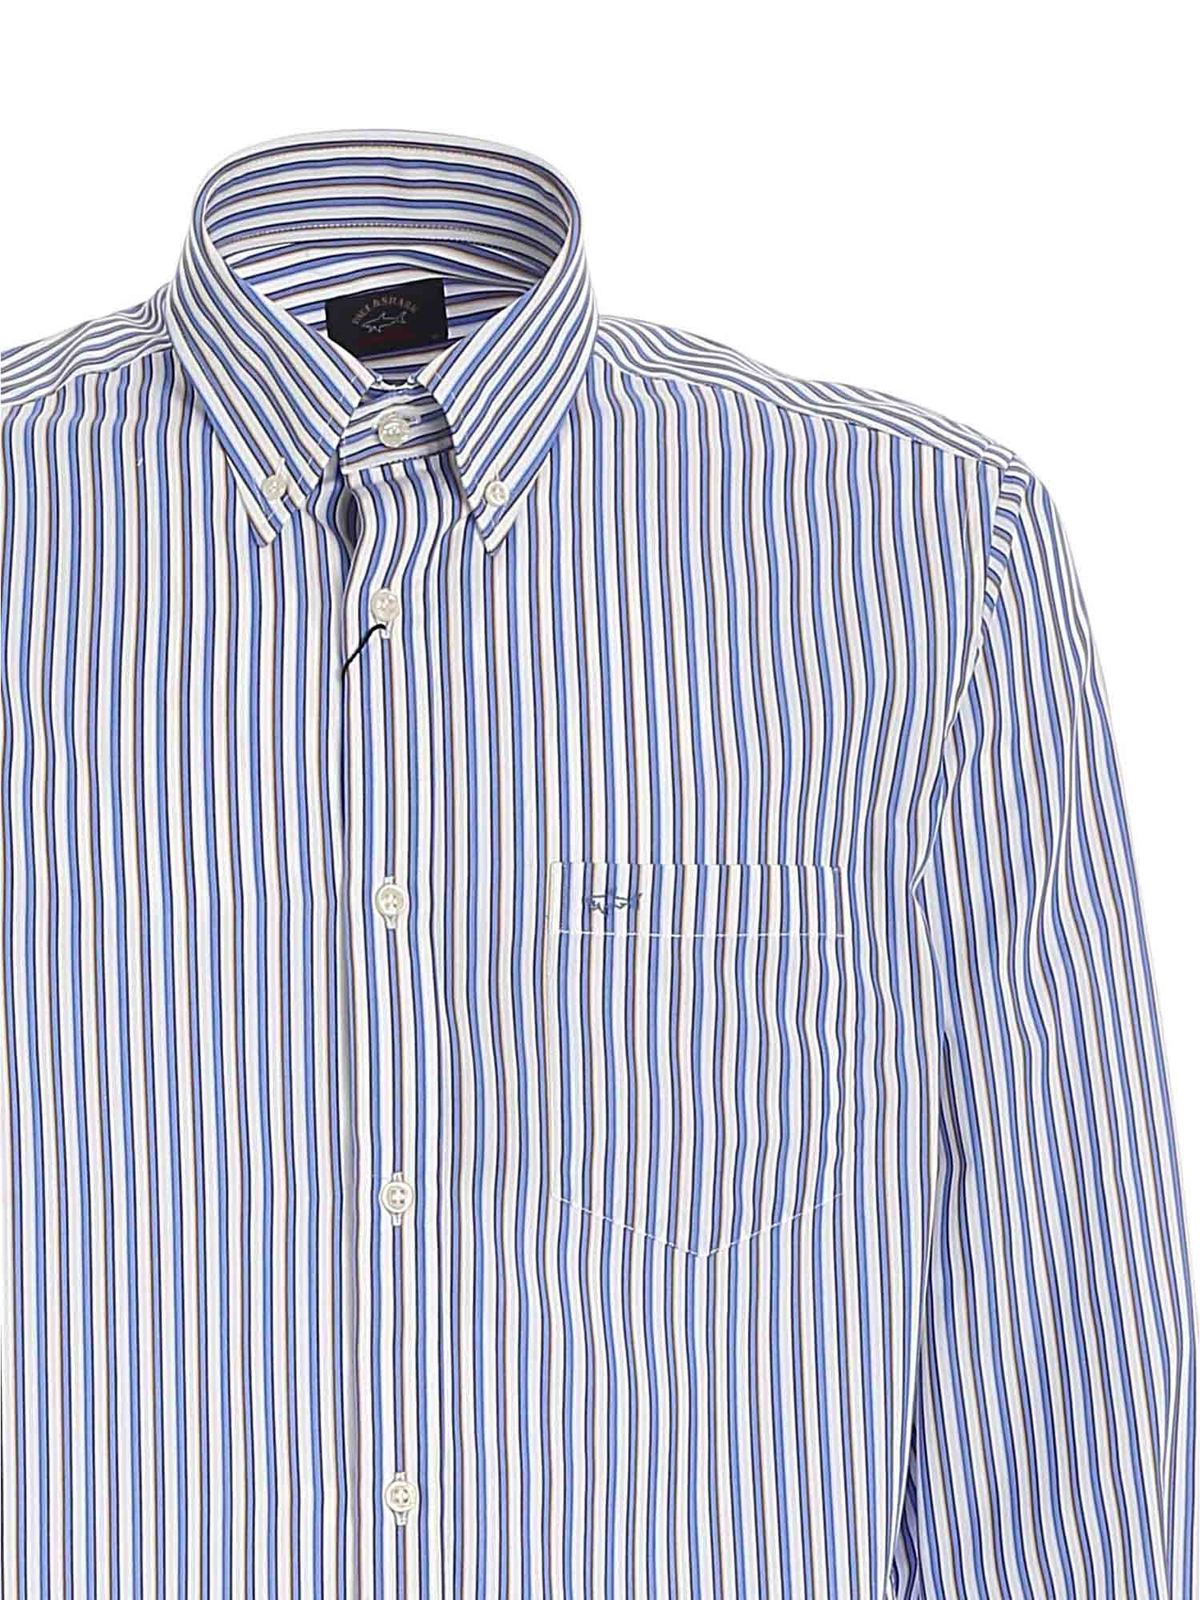 Camisas Paul - Camisa Azul Claro - 21413142003 | THEBS [iKRIX]